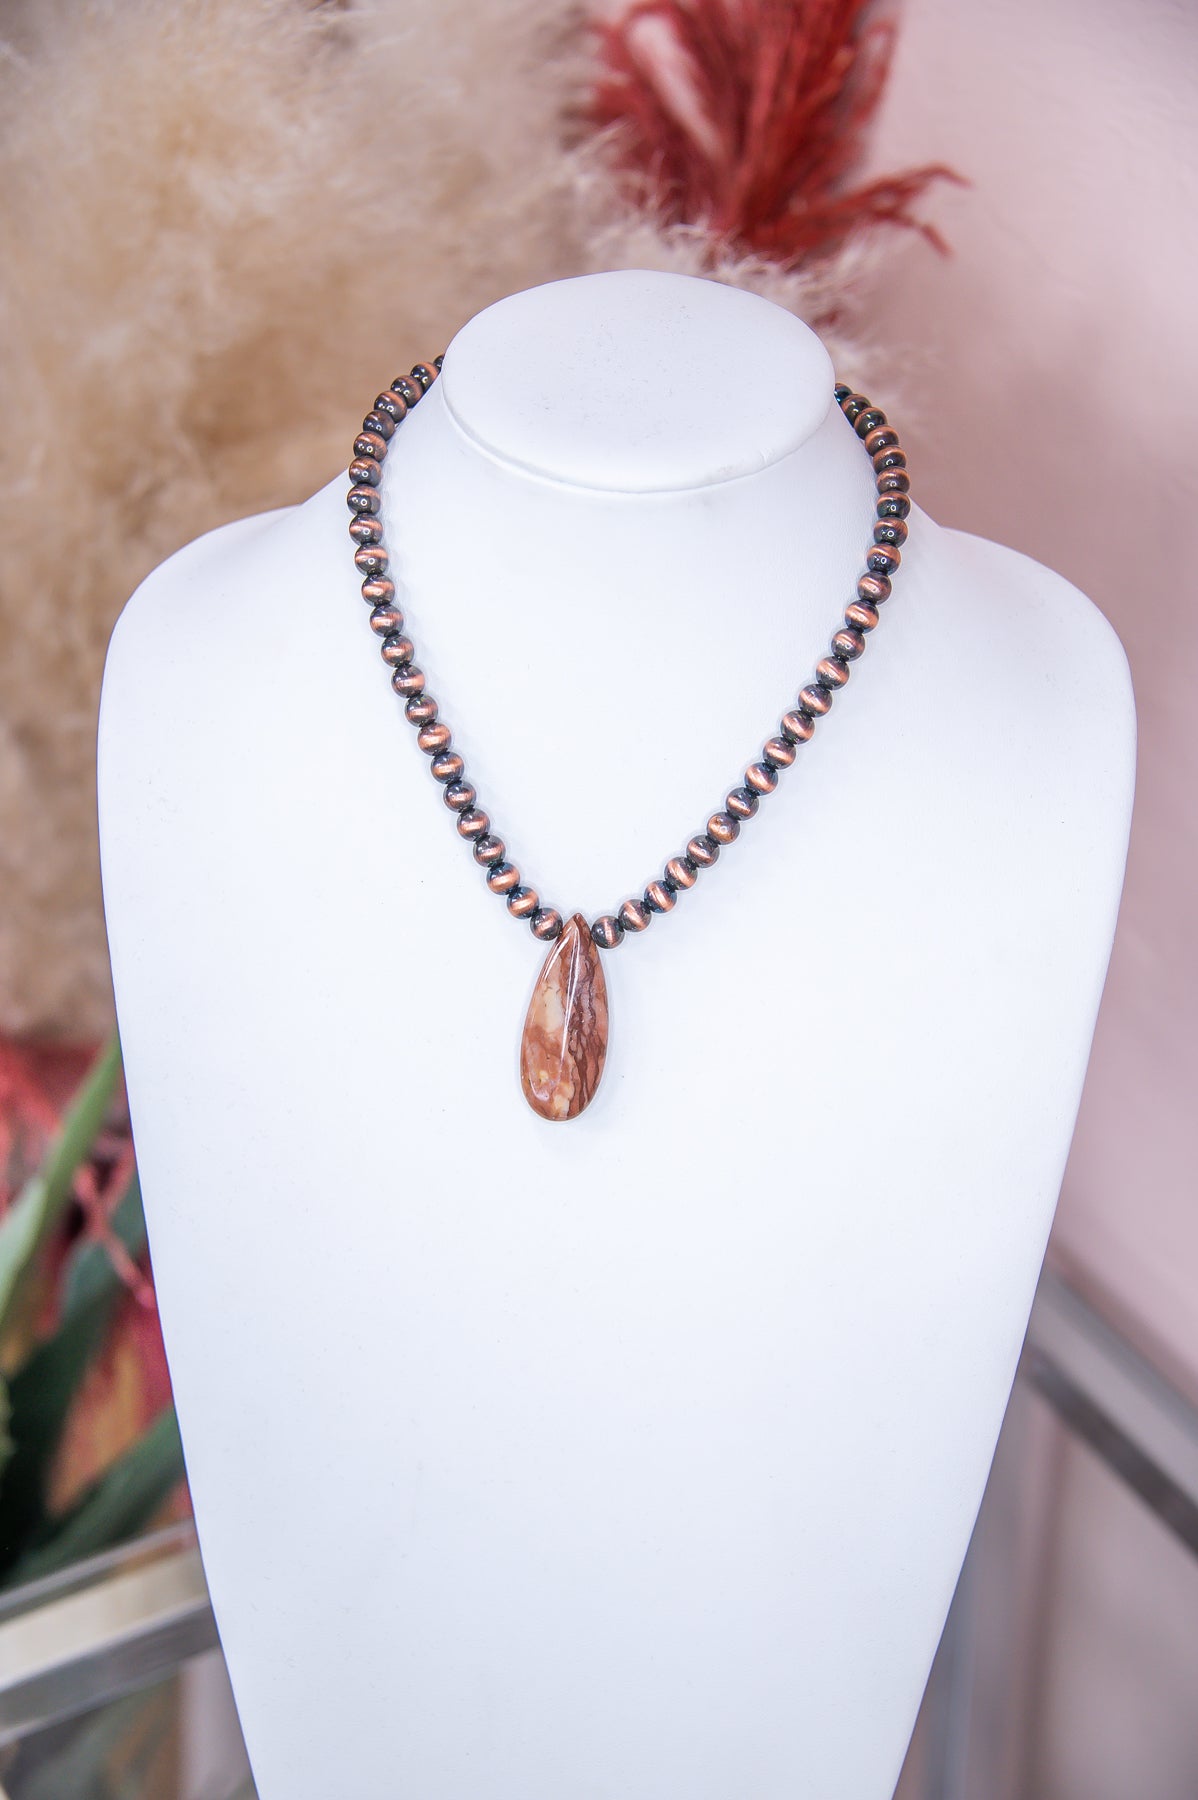 Copper/Brown Stone Pendant Beaded Necklace - NEK4196CP